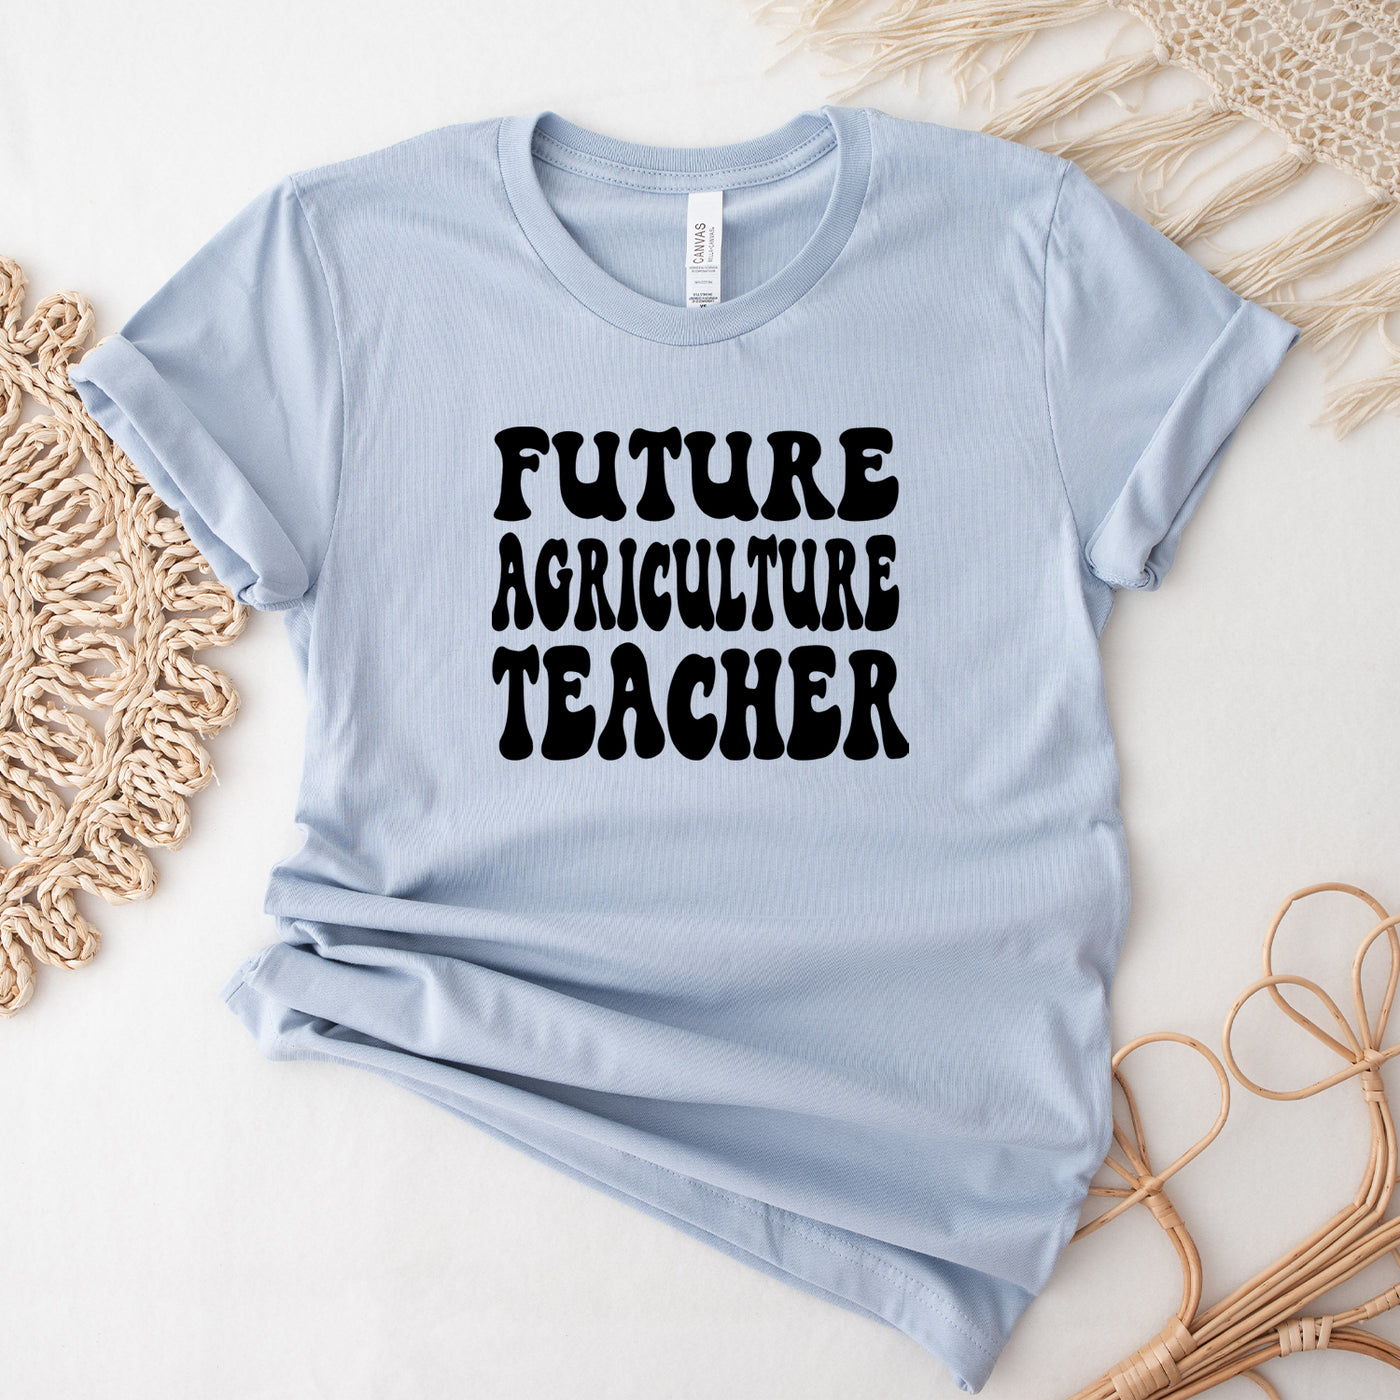 Groovy Future Ag Teacher T-Shirt (XS-4XL) - Multiple Colors!